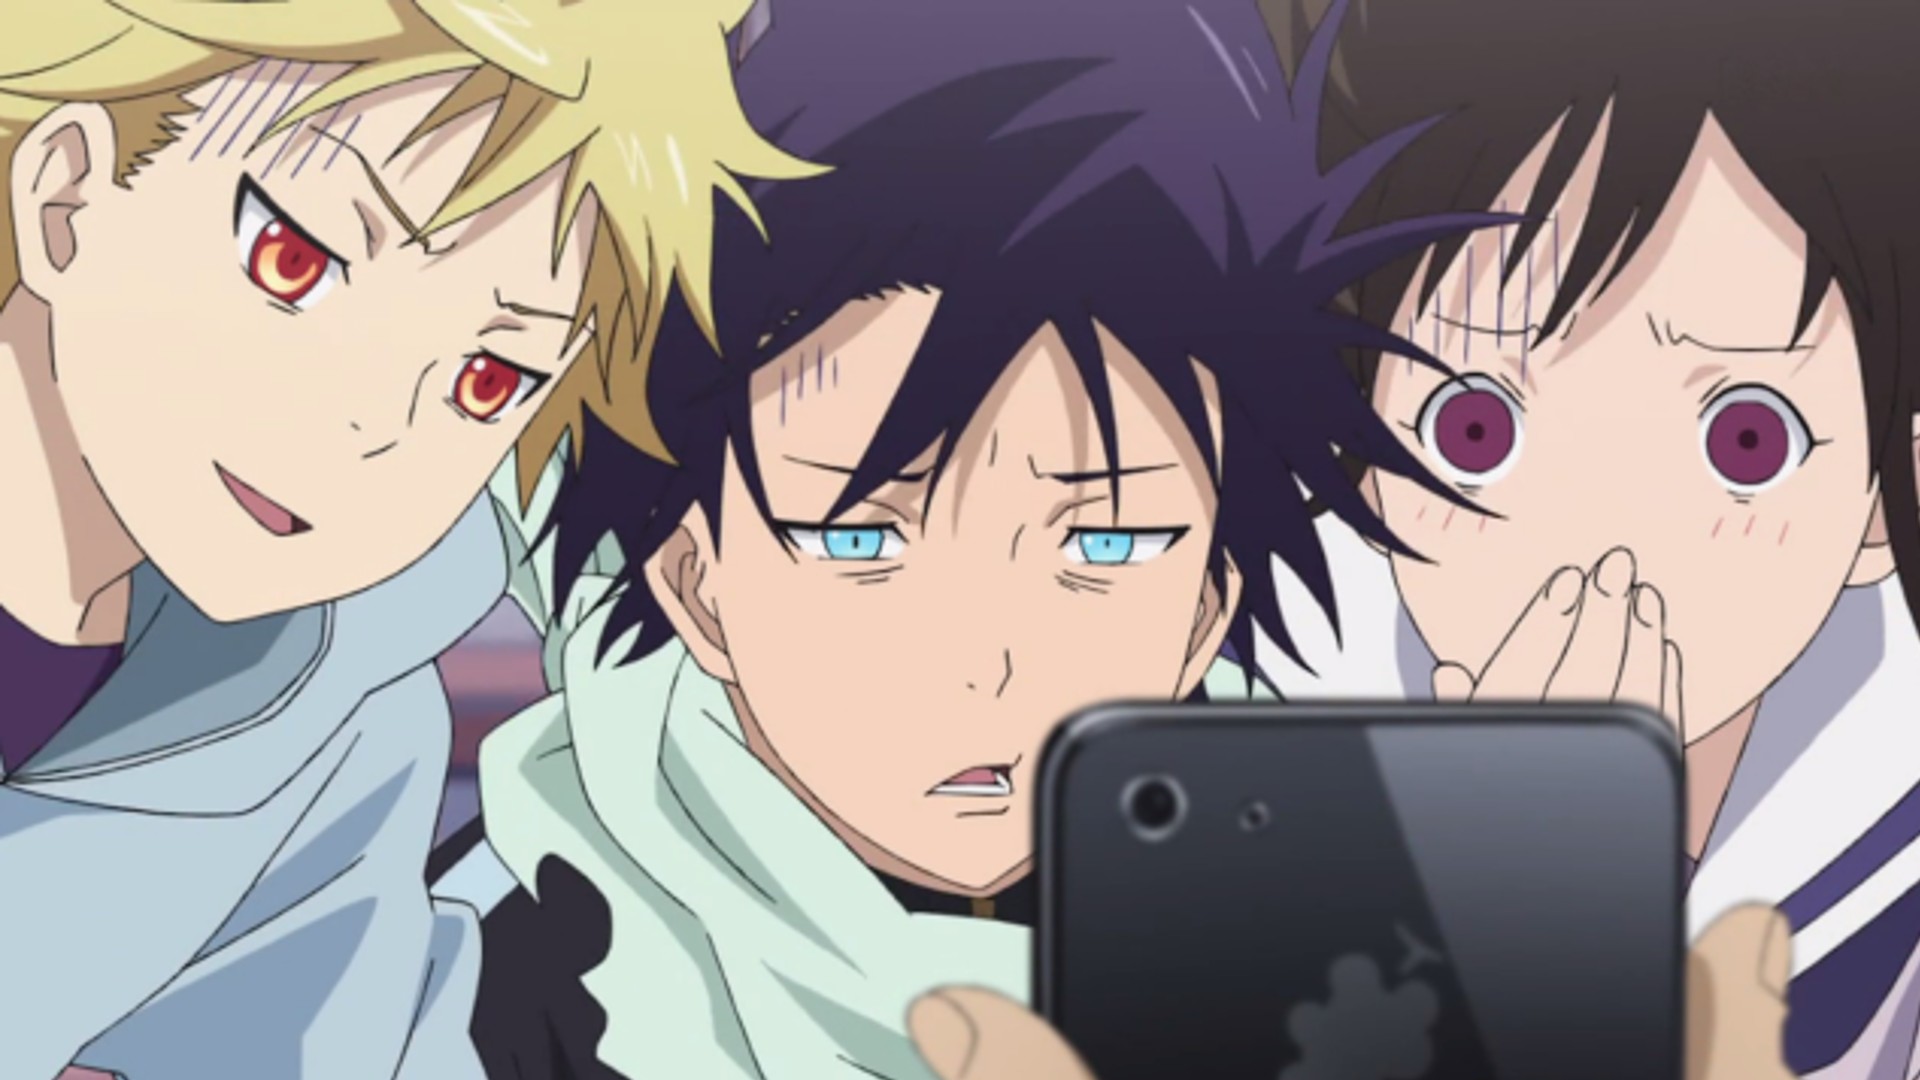 Personajes de anime viendo el celular